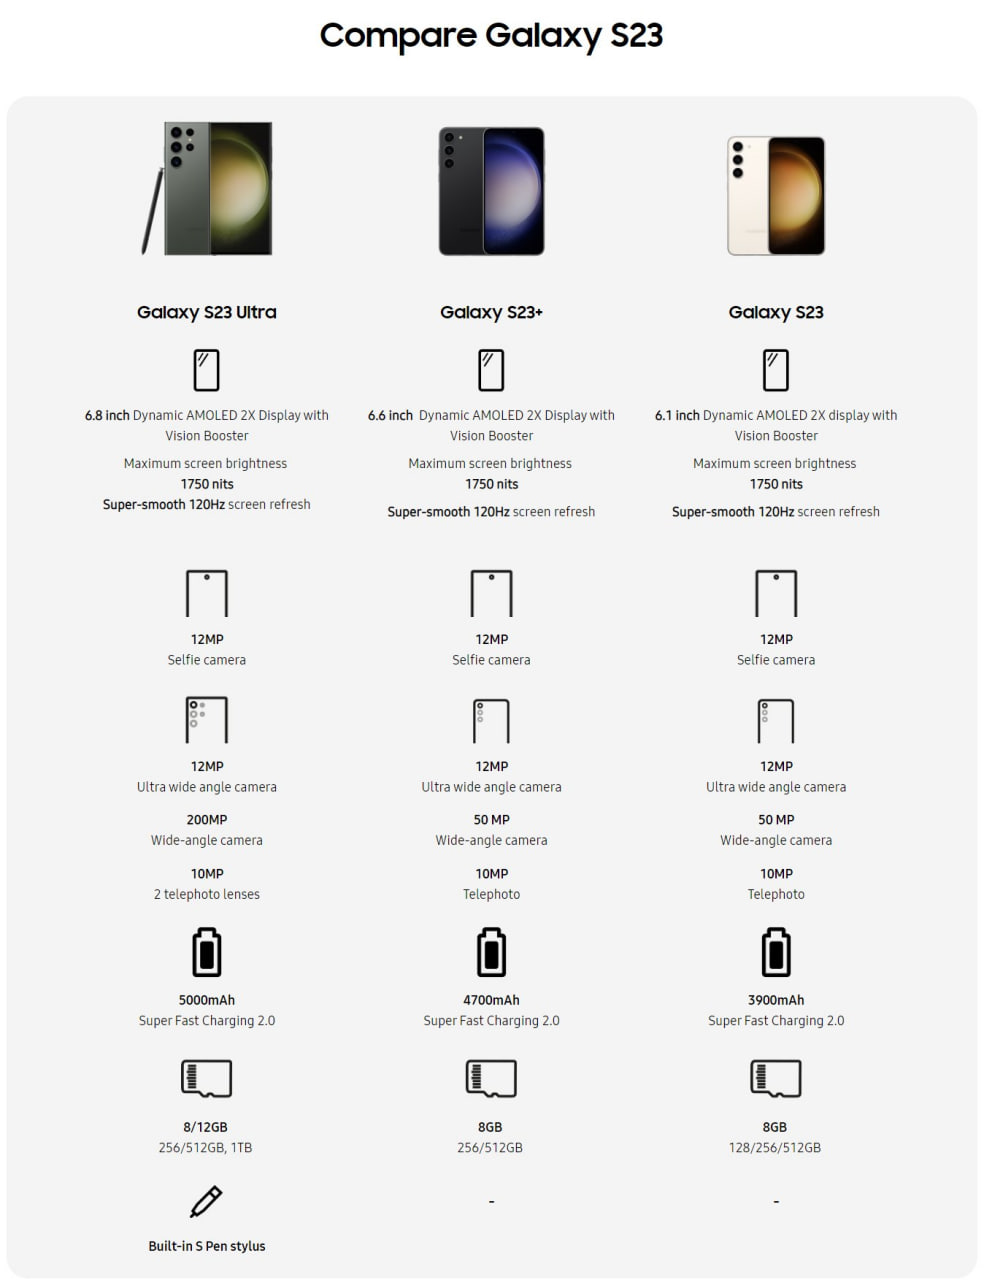 Samsung Galaxy S23 - Ficha Técnica